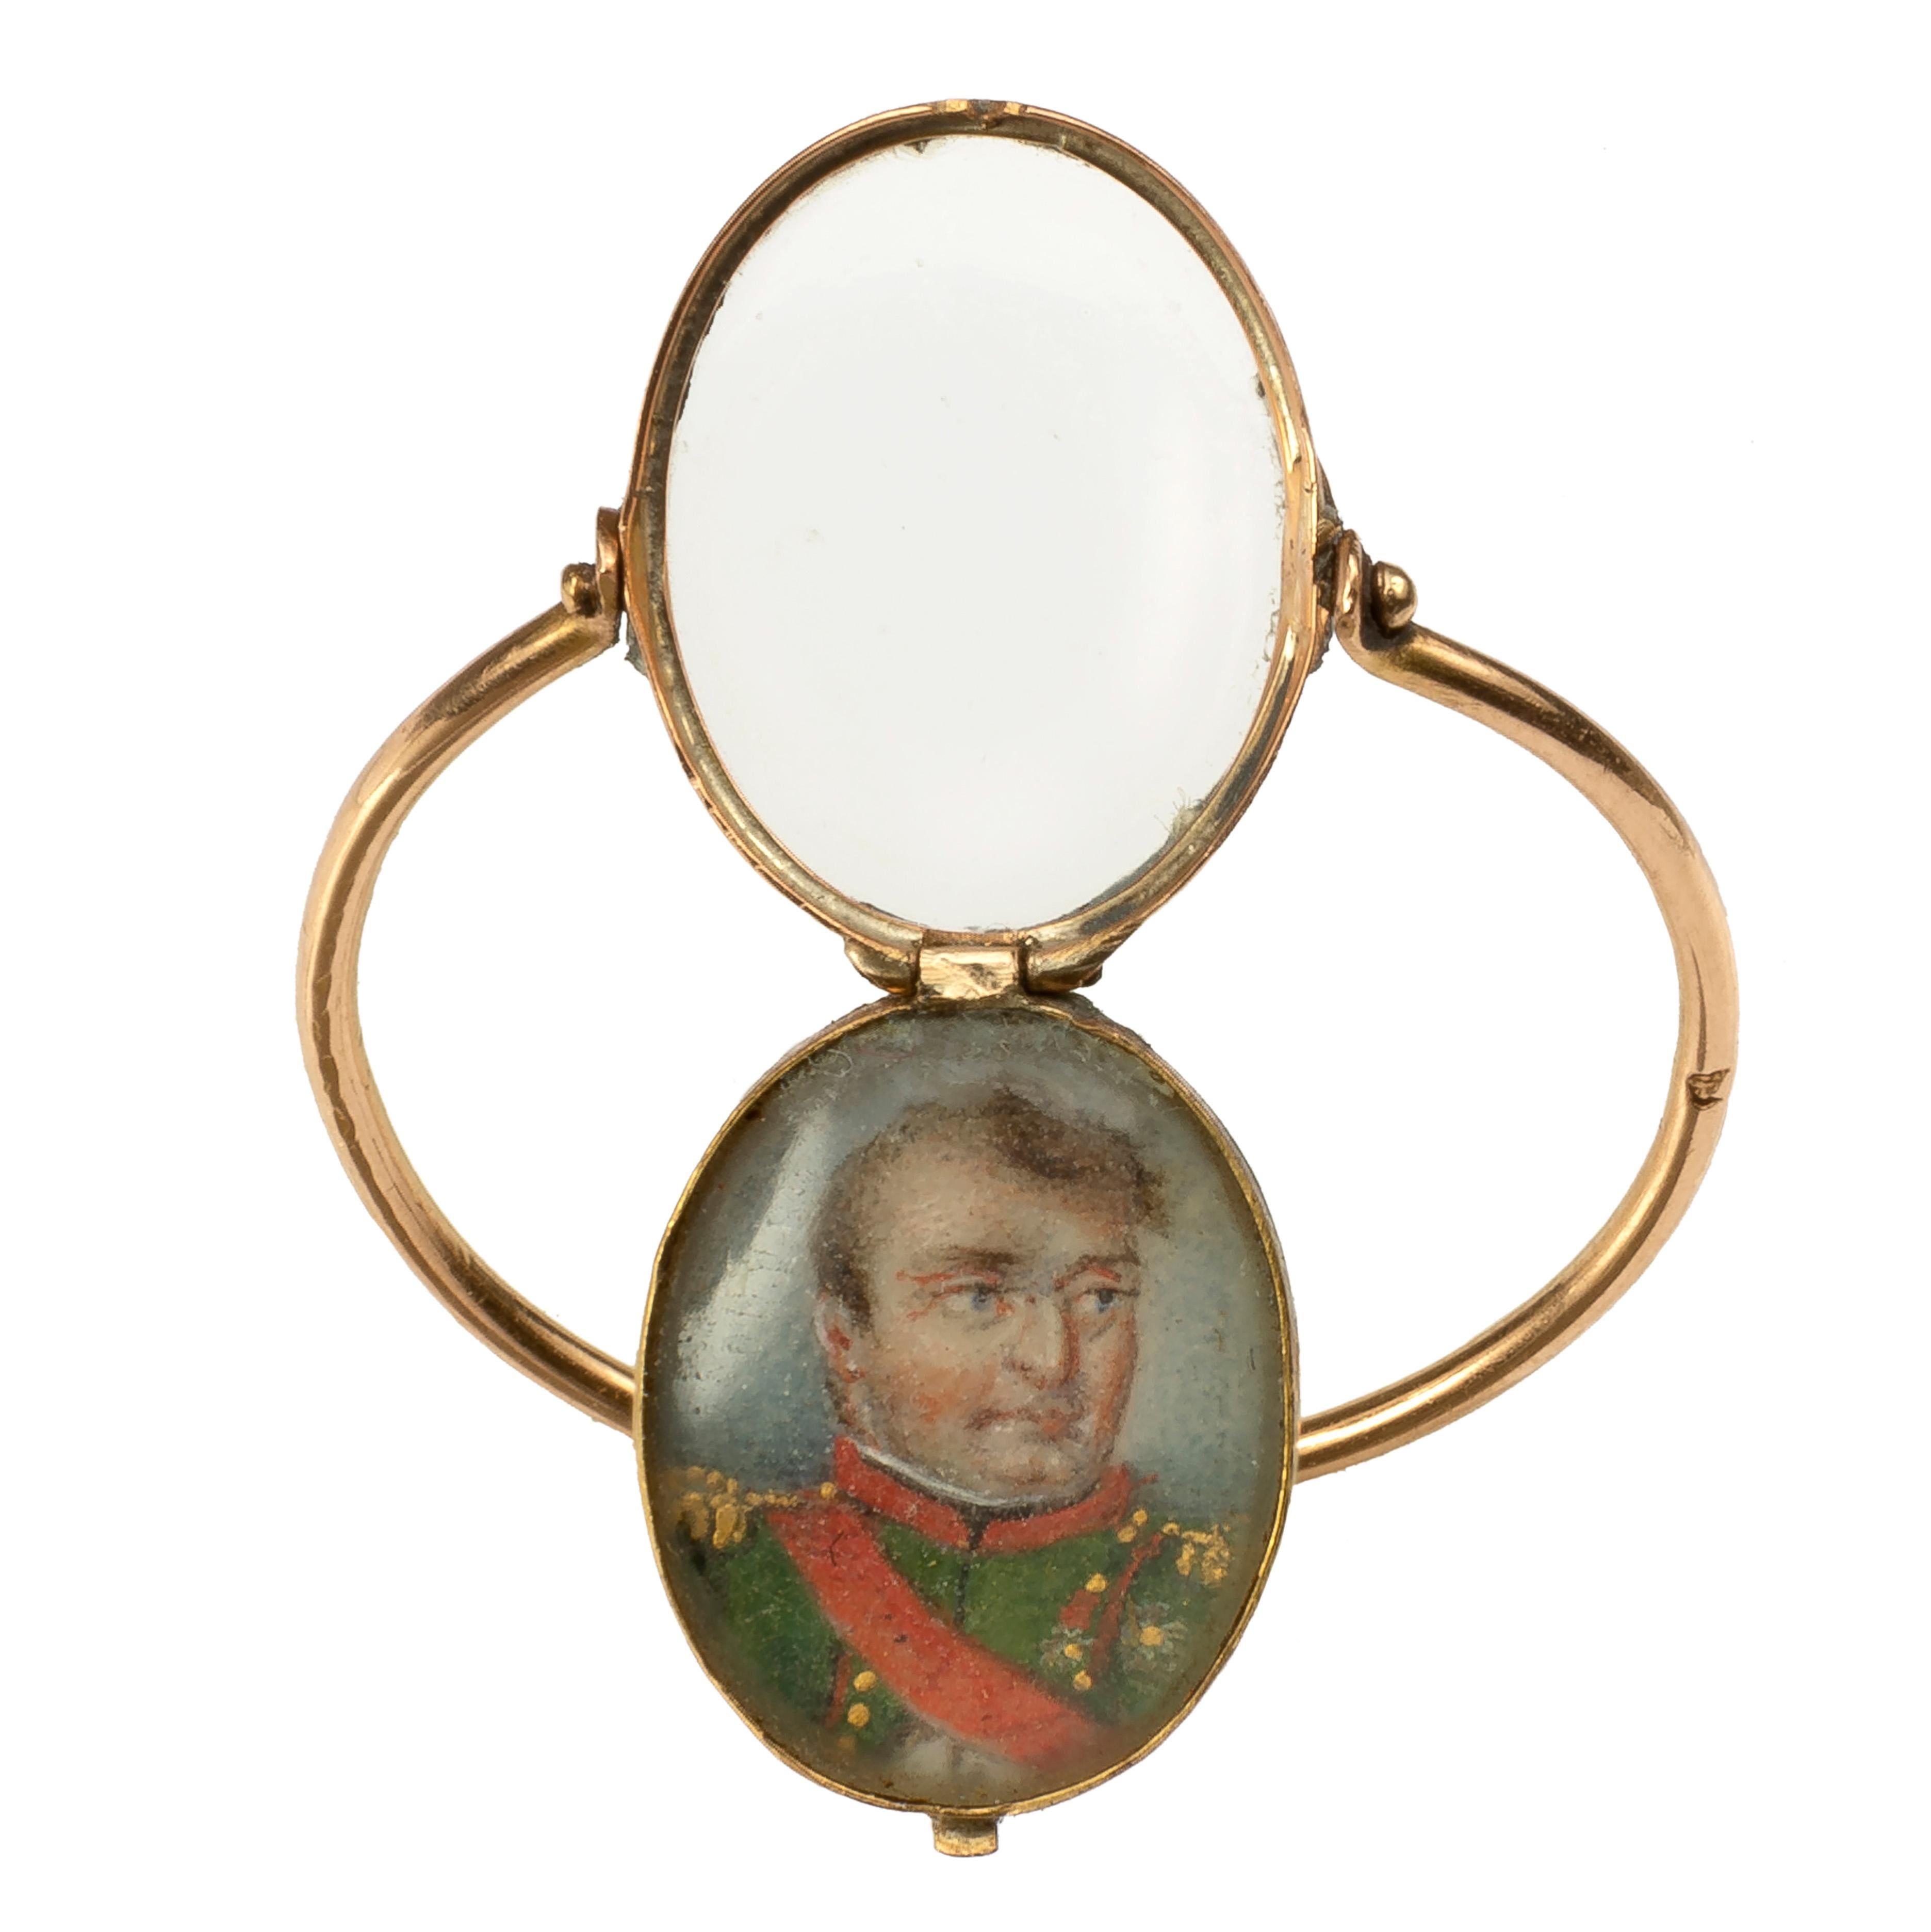 Antique Gold Locket Swivel Ring with Portrait of Napoléon Bonaparte